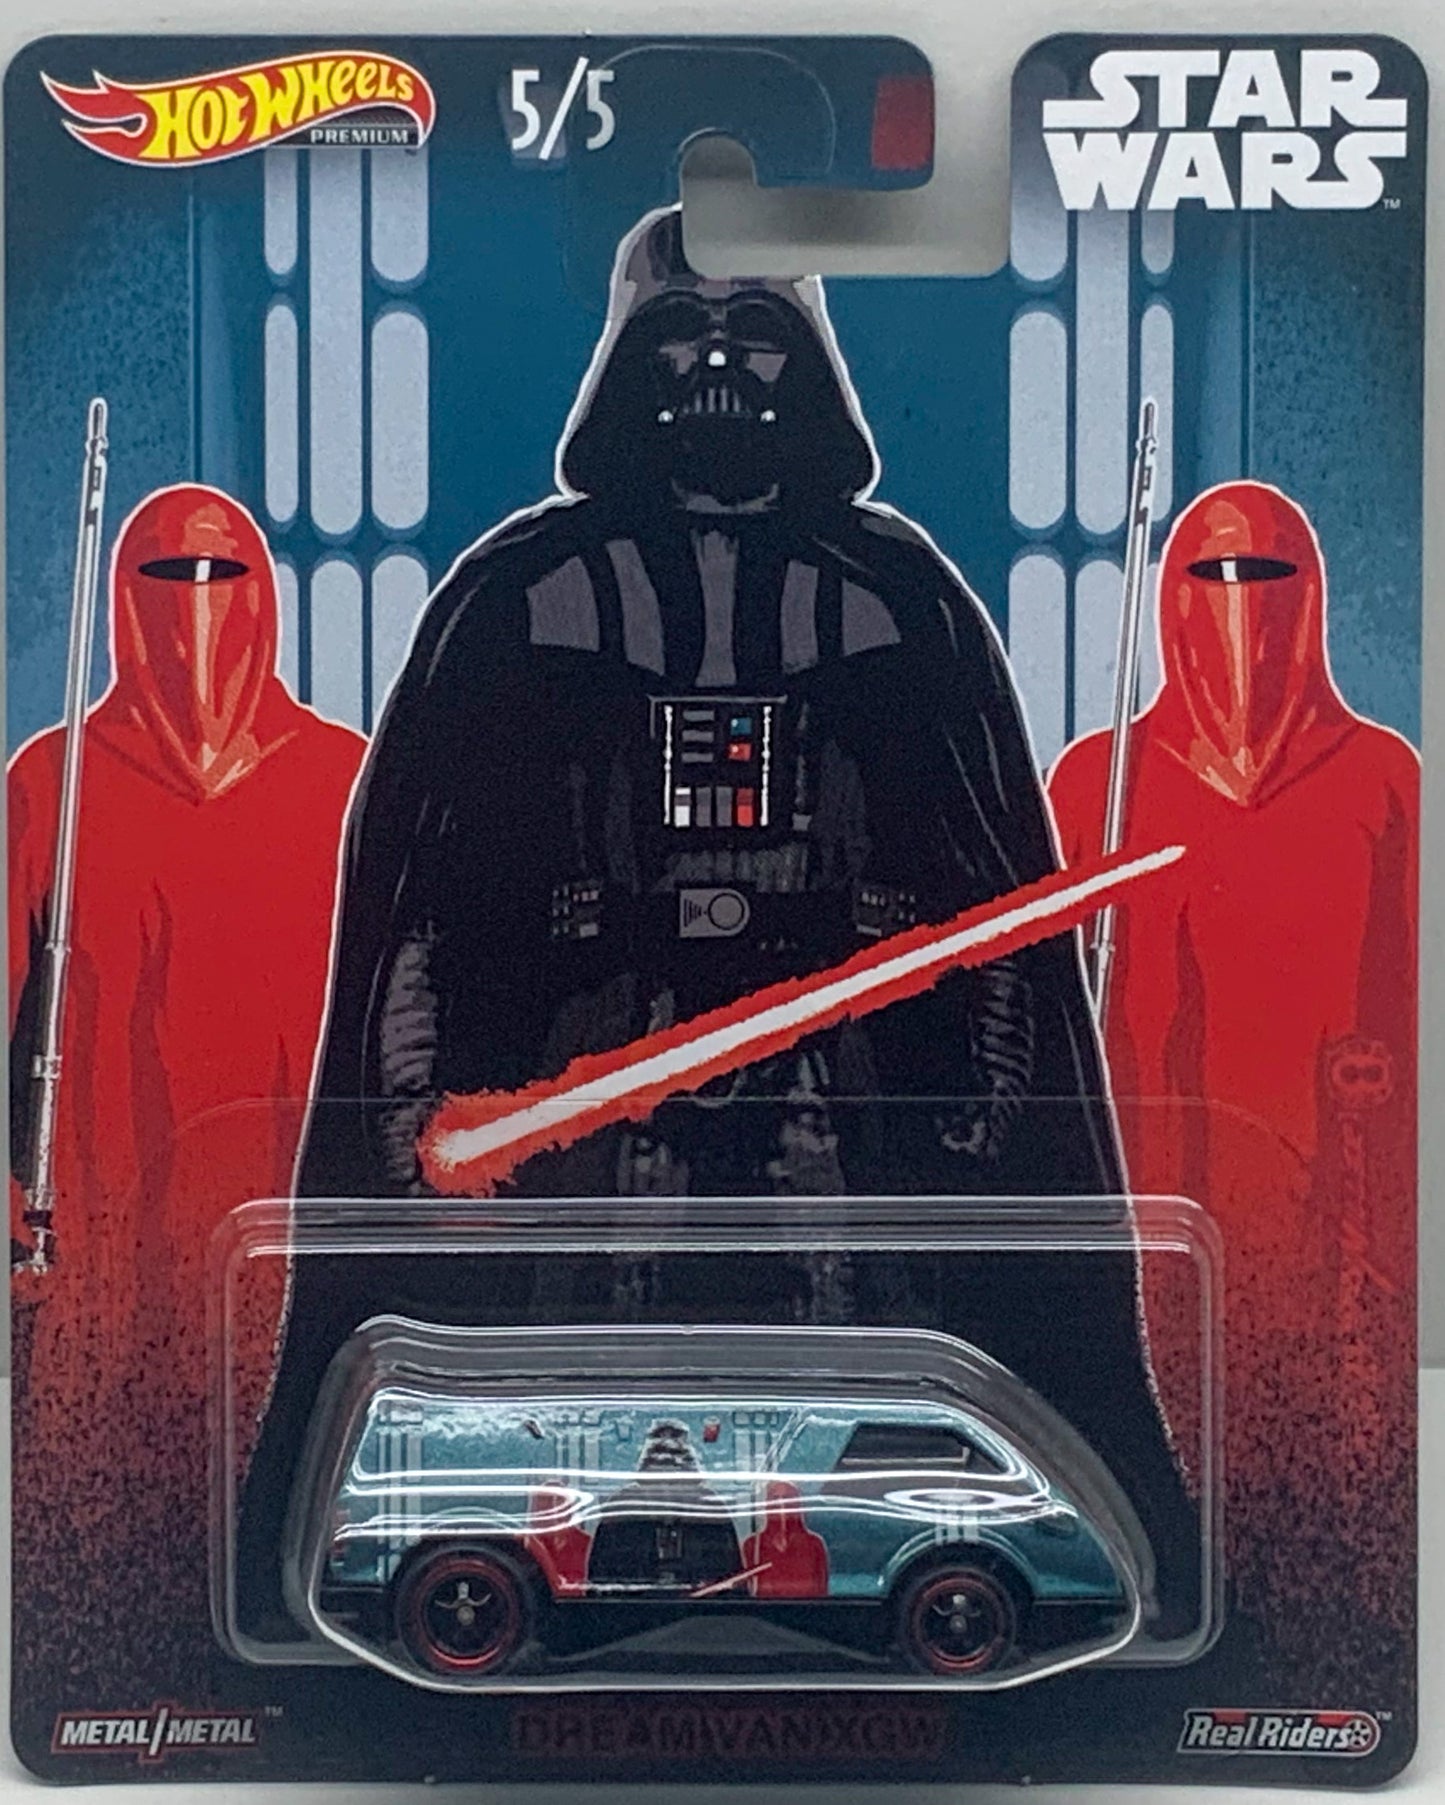 Buy at Tatoyshop.com 2019 Hot Wheels Pop Culture Series Star Wars Dream Van XGW Darth Vader Number 5/5 Premium Real Riders Metal Mattel DLB45 Shop Now